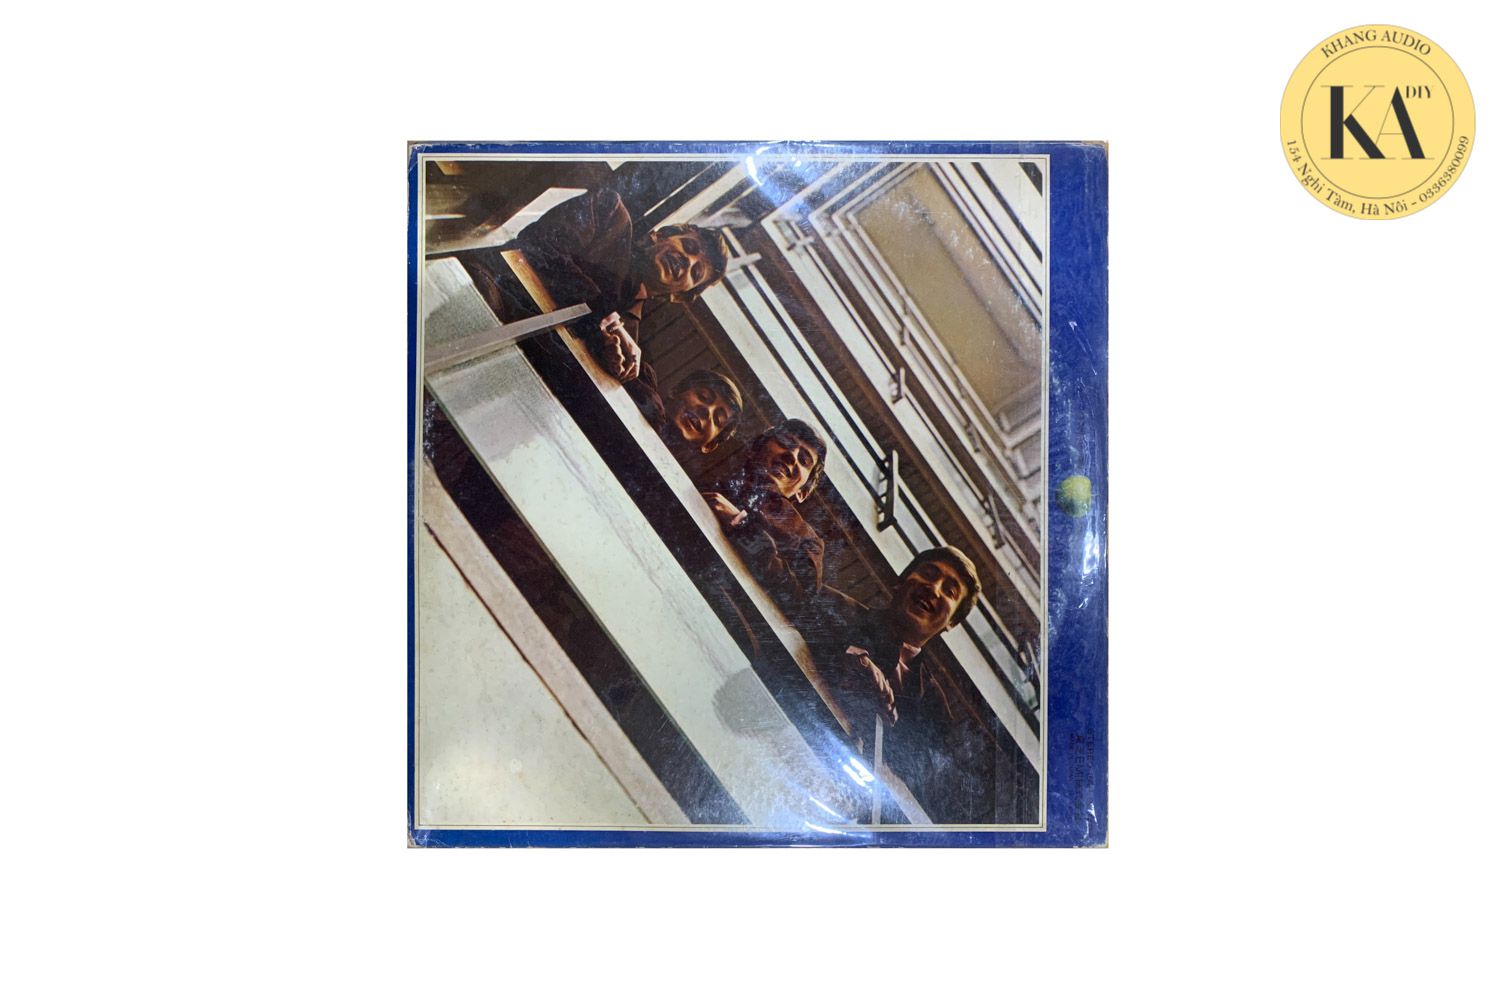 Đĩa Than LP The Beatles / 1967 - 1970 Khang Audio 0336380099